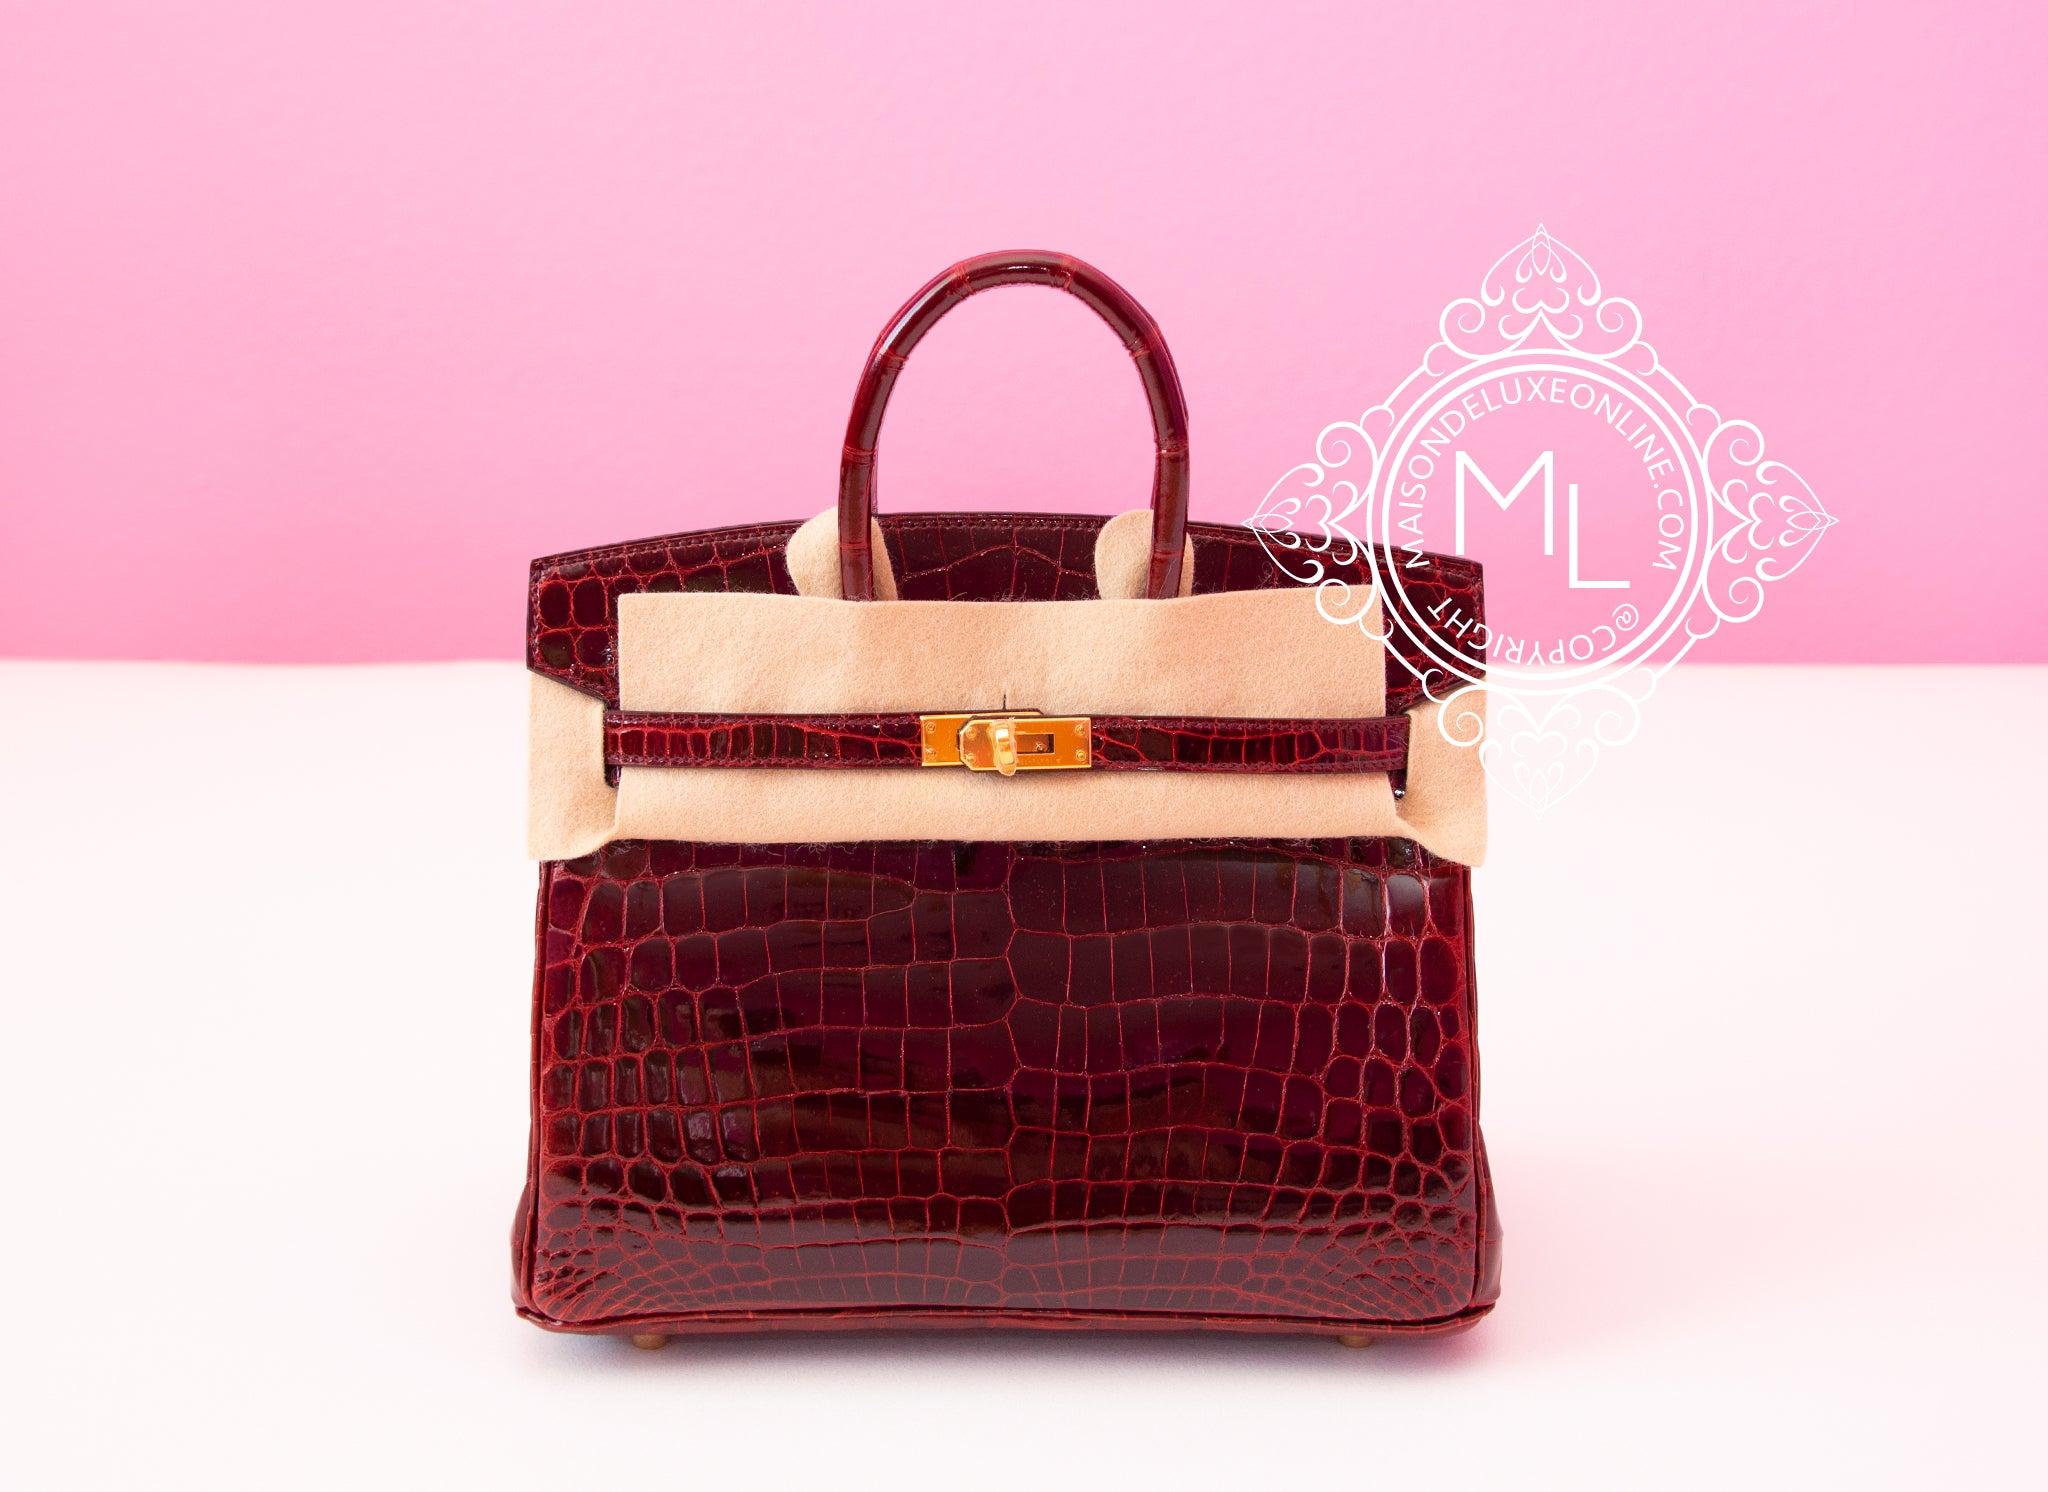 Gorgeous rich burgundy wine colour Birkin bag by Hermes. Stylish